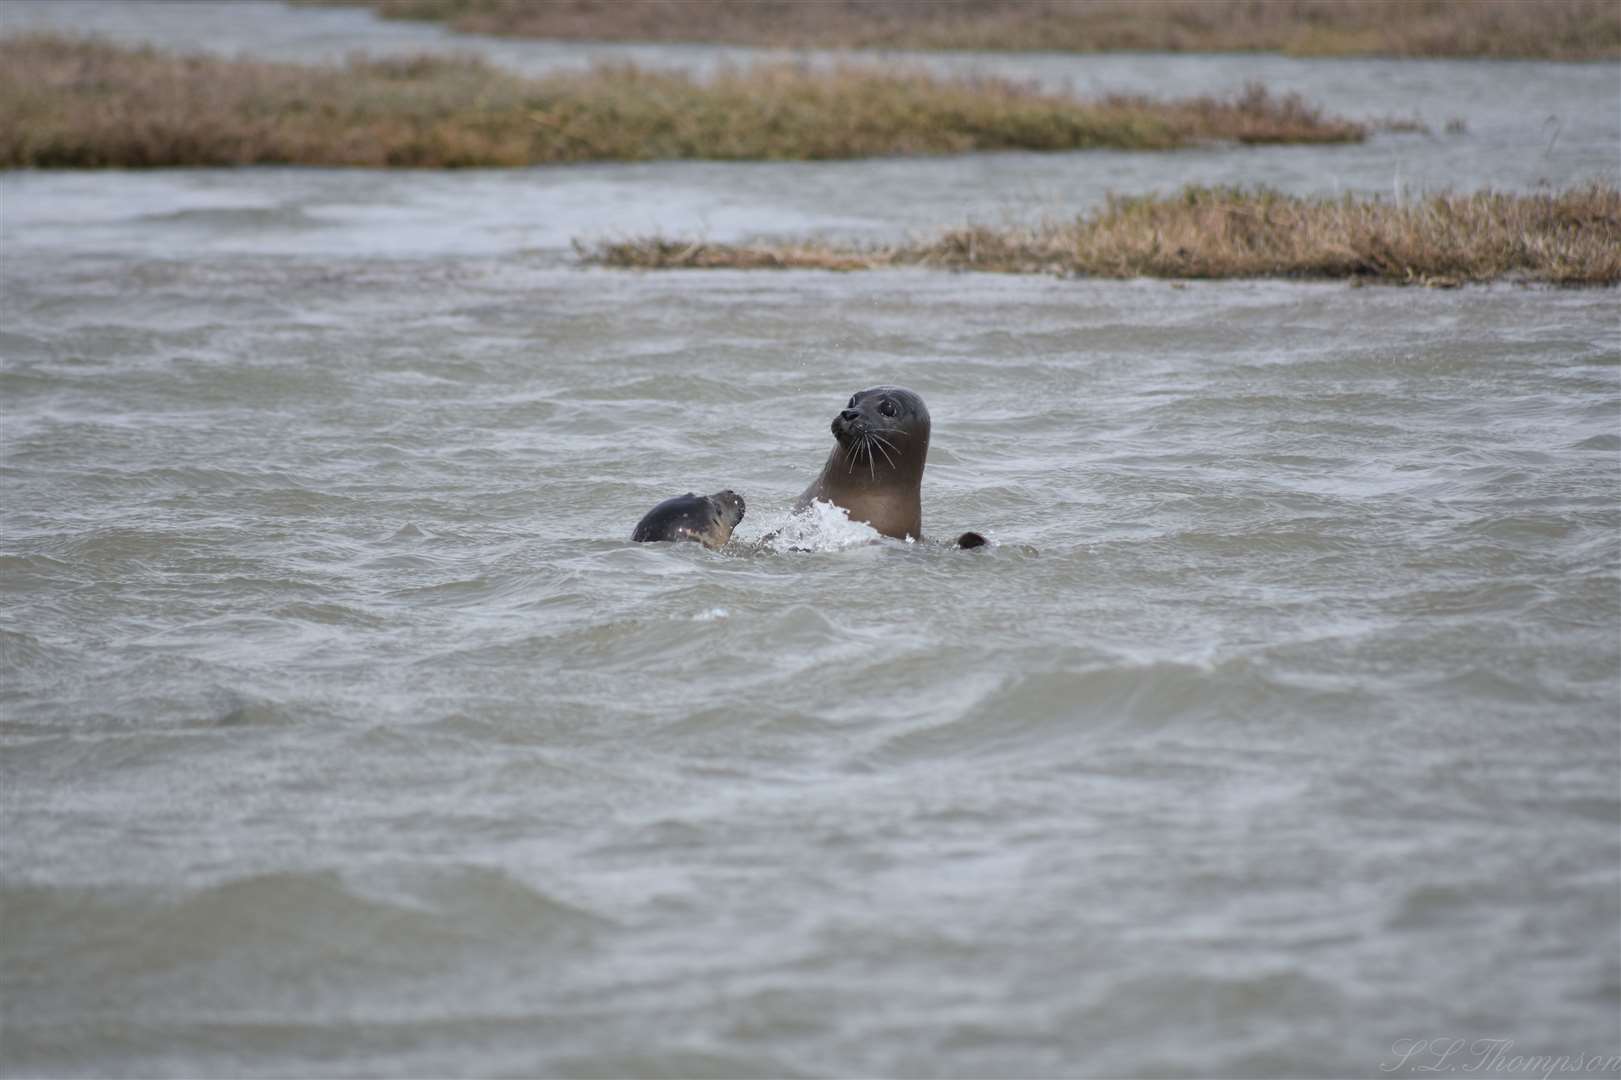 Seals generally hunt alone. Picture: Sherece Thompson